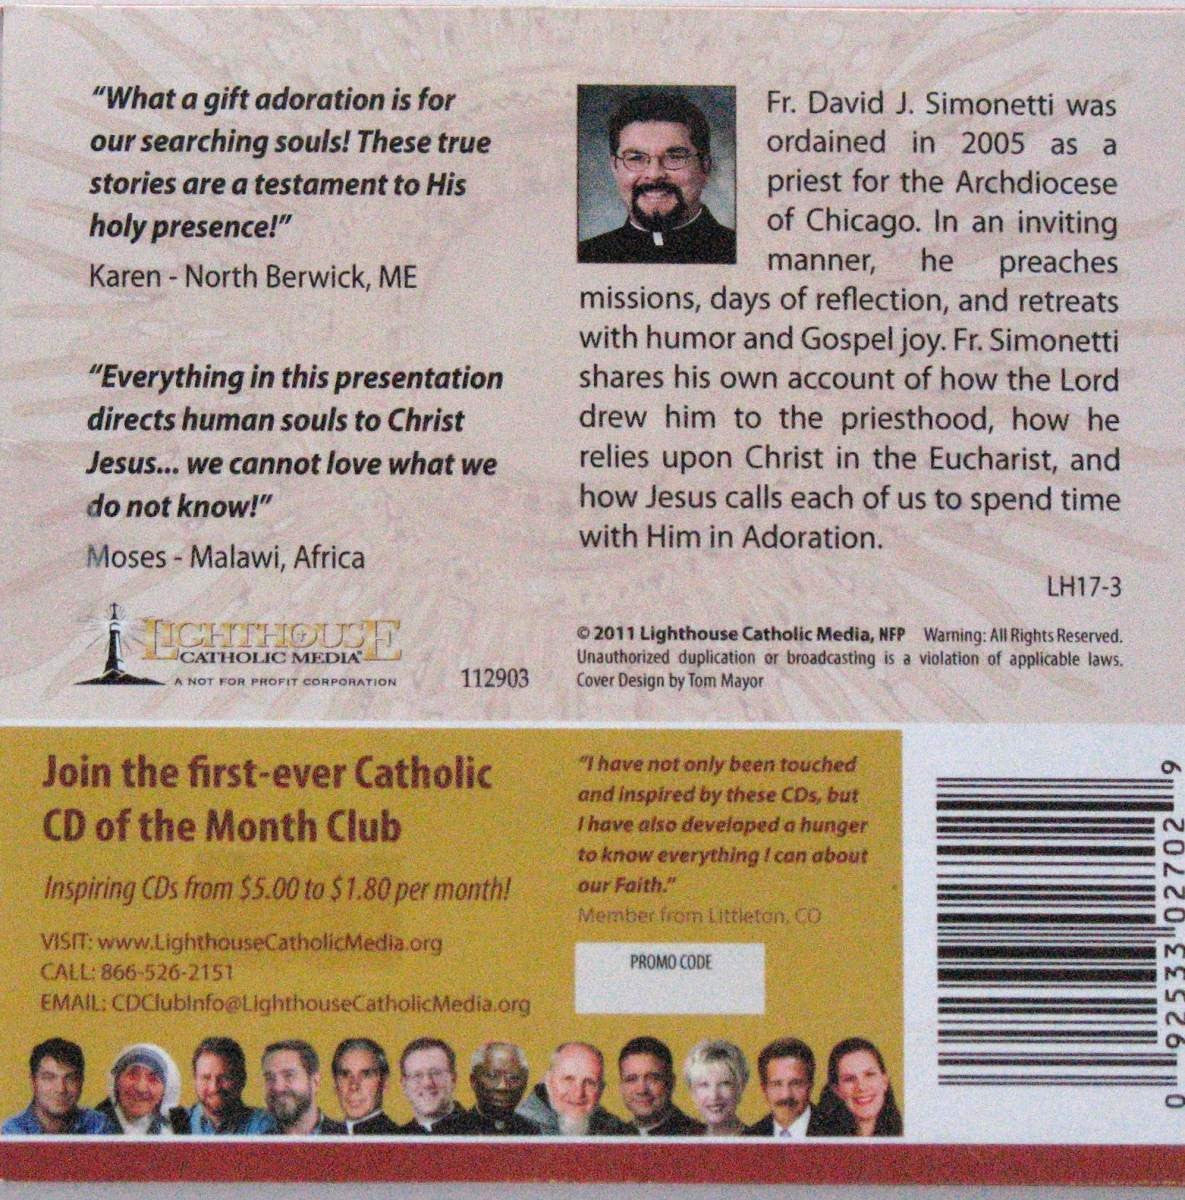 Stay With Us, Lord - Eucharist Adoration - CD Talk by Fr. David J. Simonetti